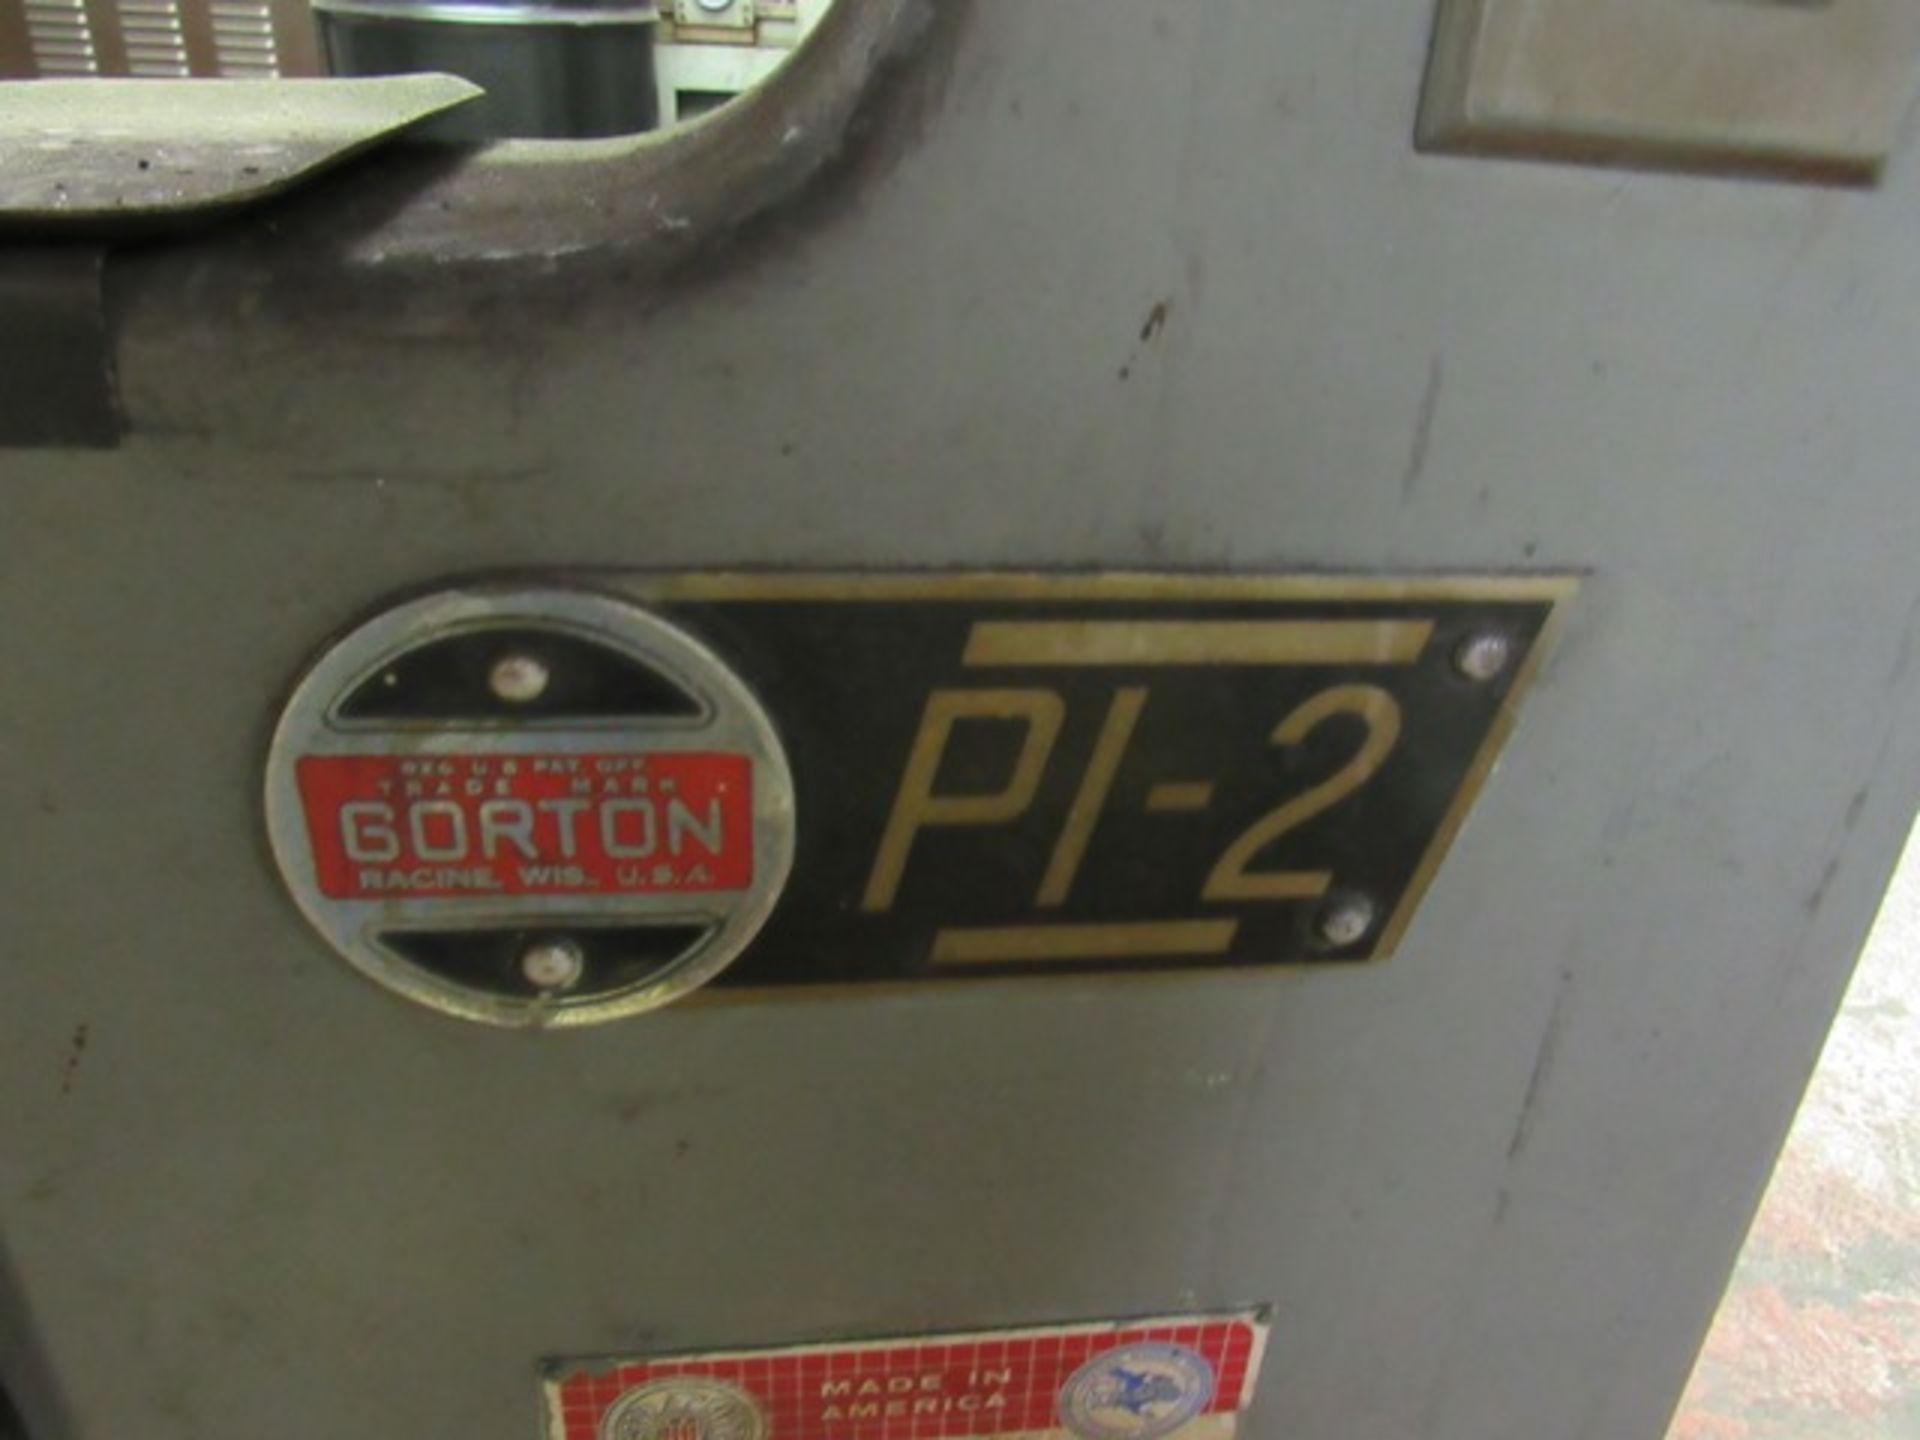 Gorton PI-2 Pantograph Engraver, Approx. 8'' x 18'', Rigging Fee: $250 - Image 4 of 5